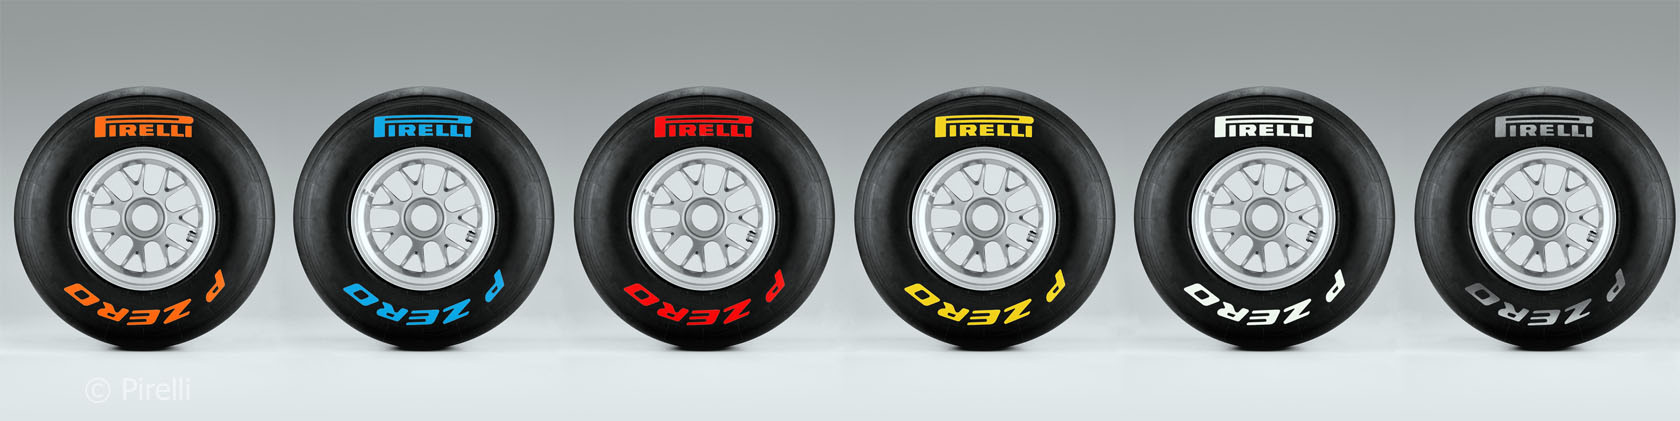 pirelli_tyres